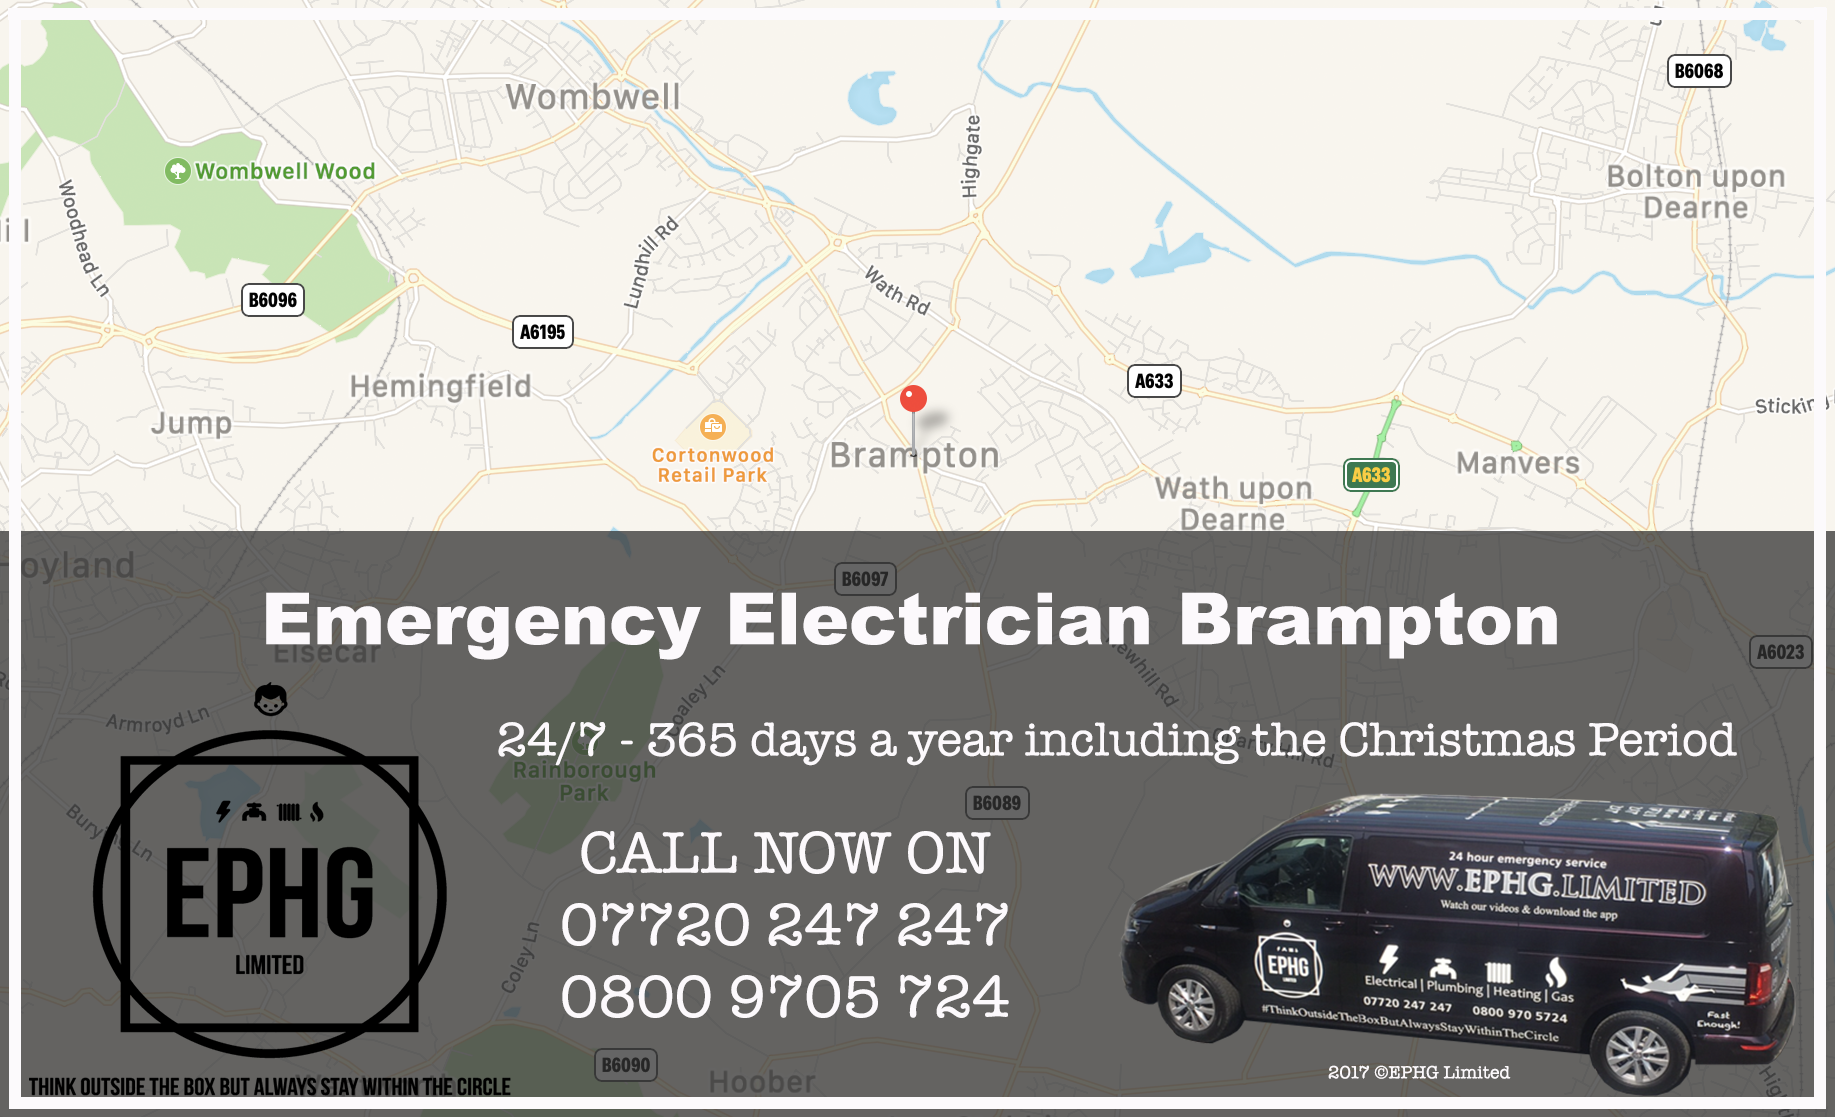 Emergency Electrician Brampton South Yorkshire